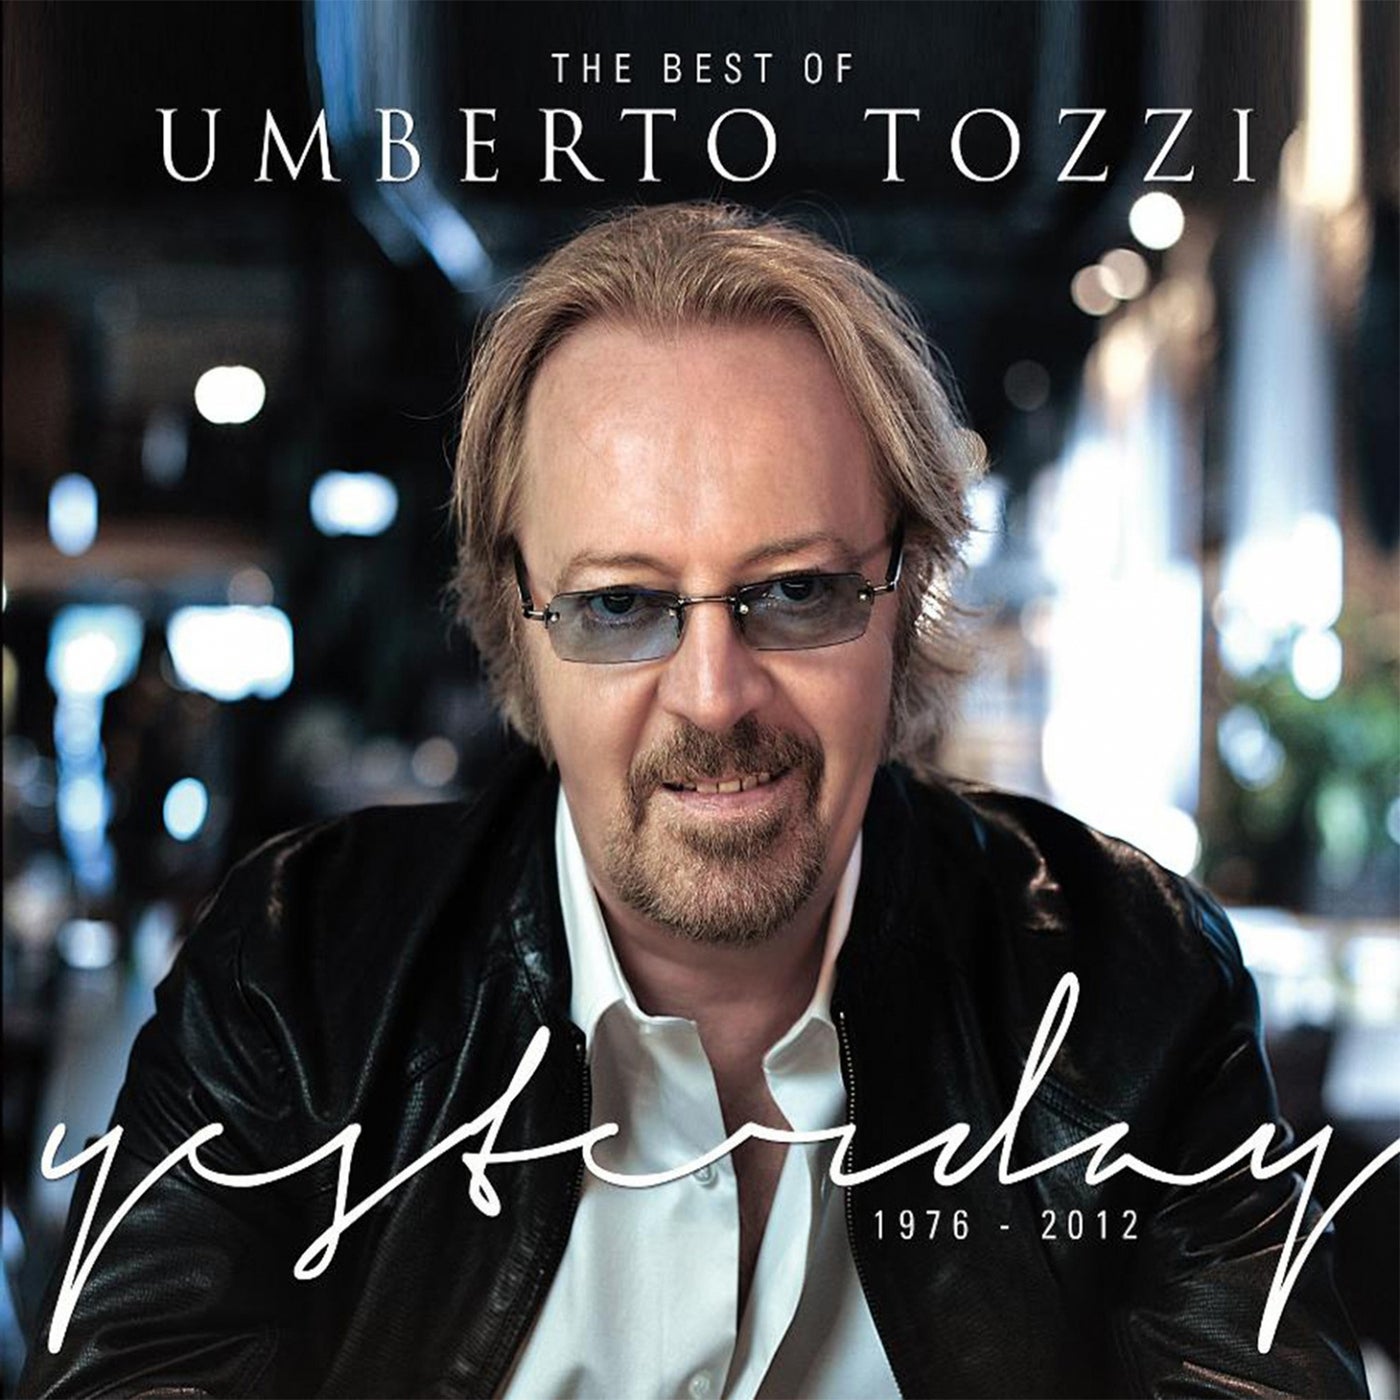 The Best of Umberto Tozzi by Umberto Tozzi on Beatsource